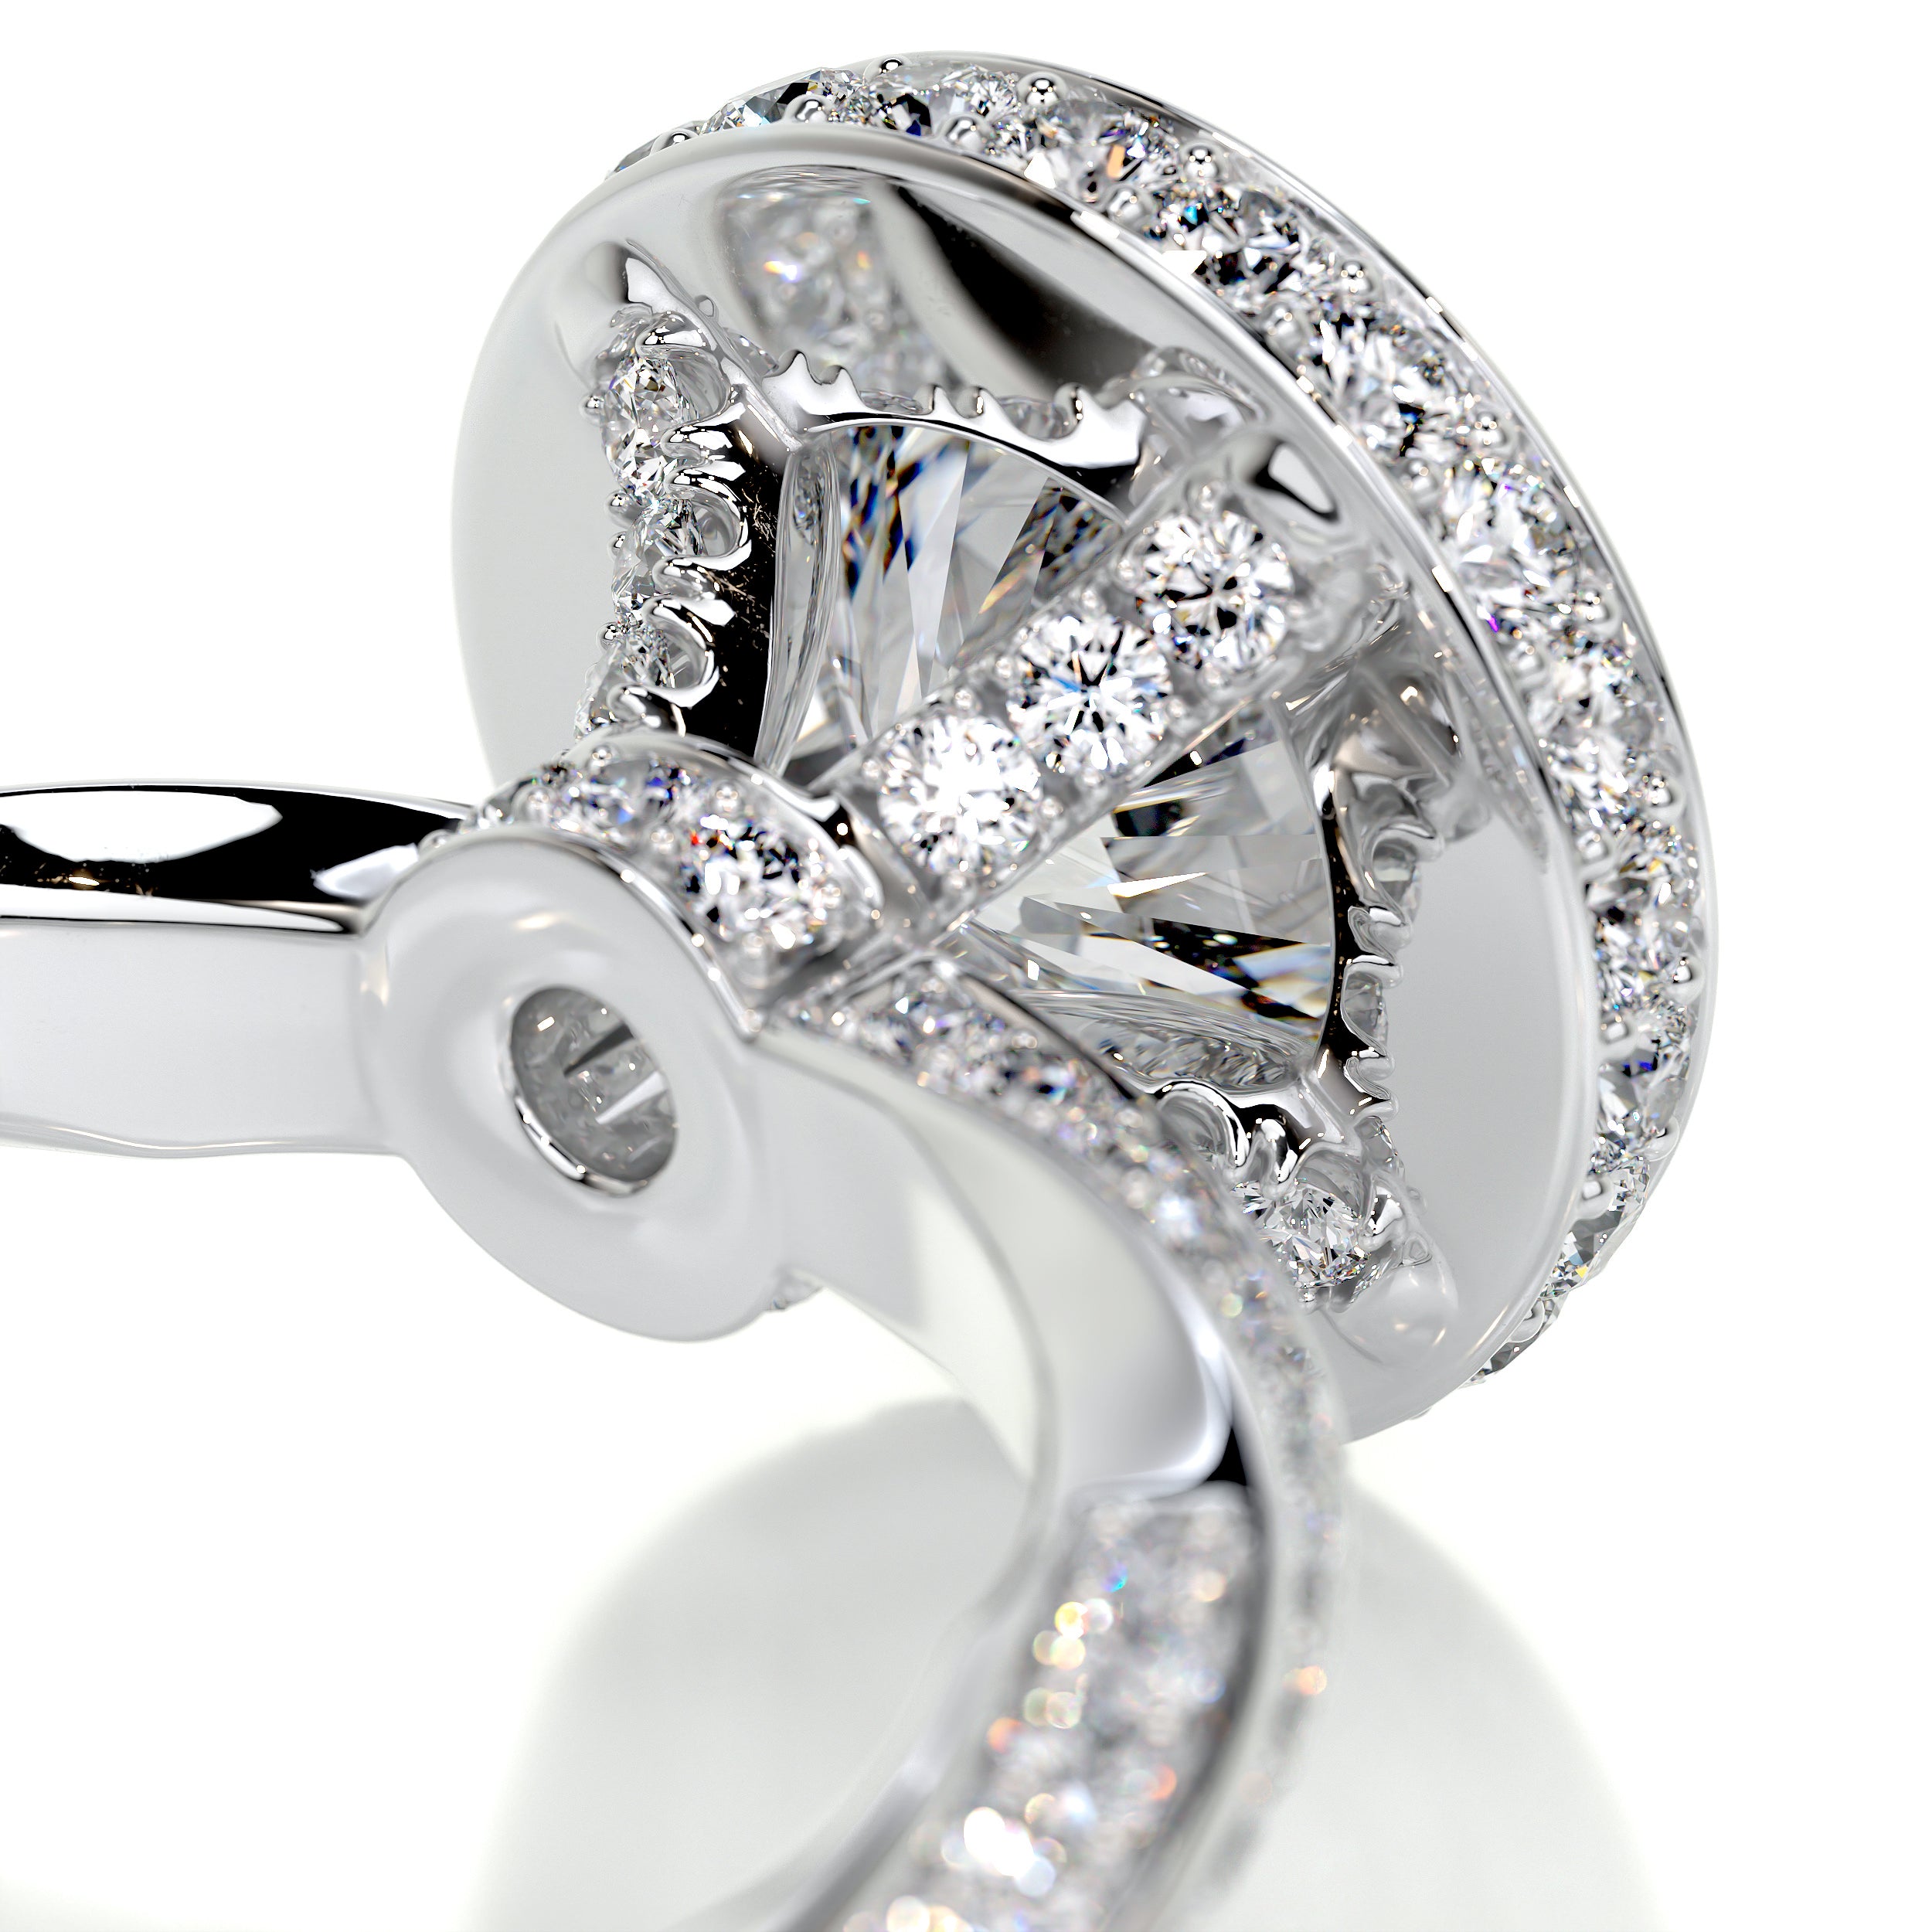 Sarina Diamond Engagement Ring -14K White Gold